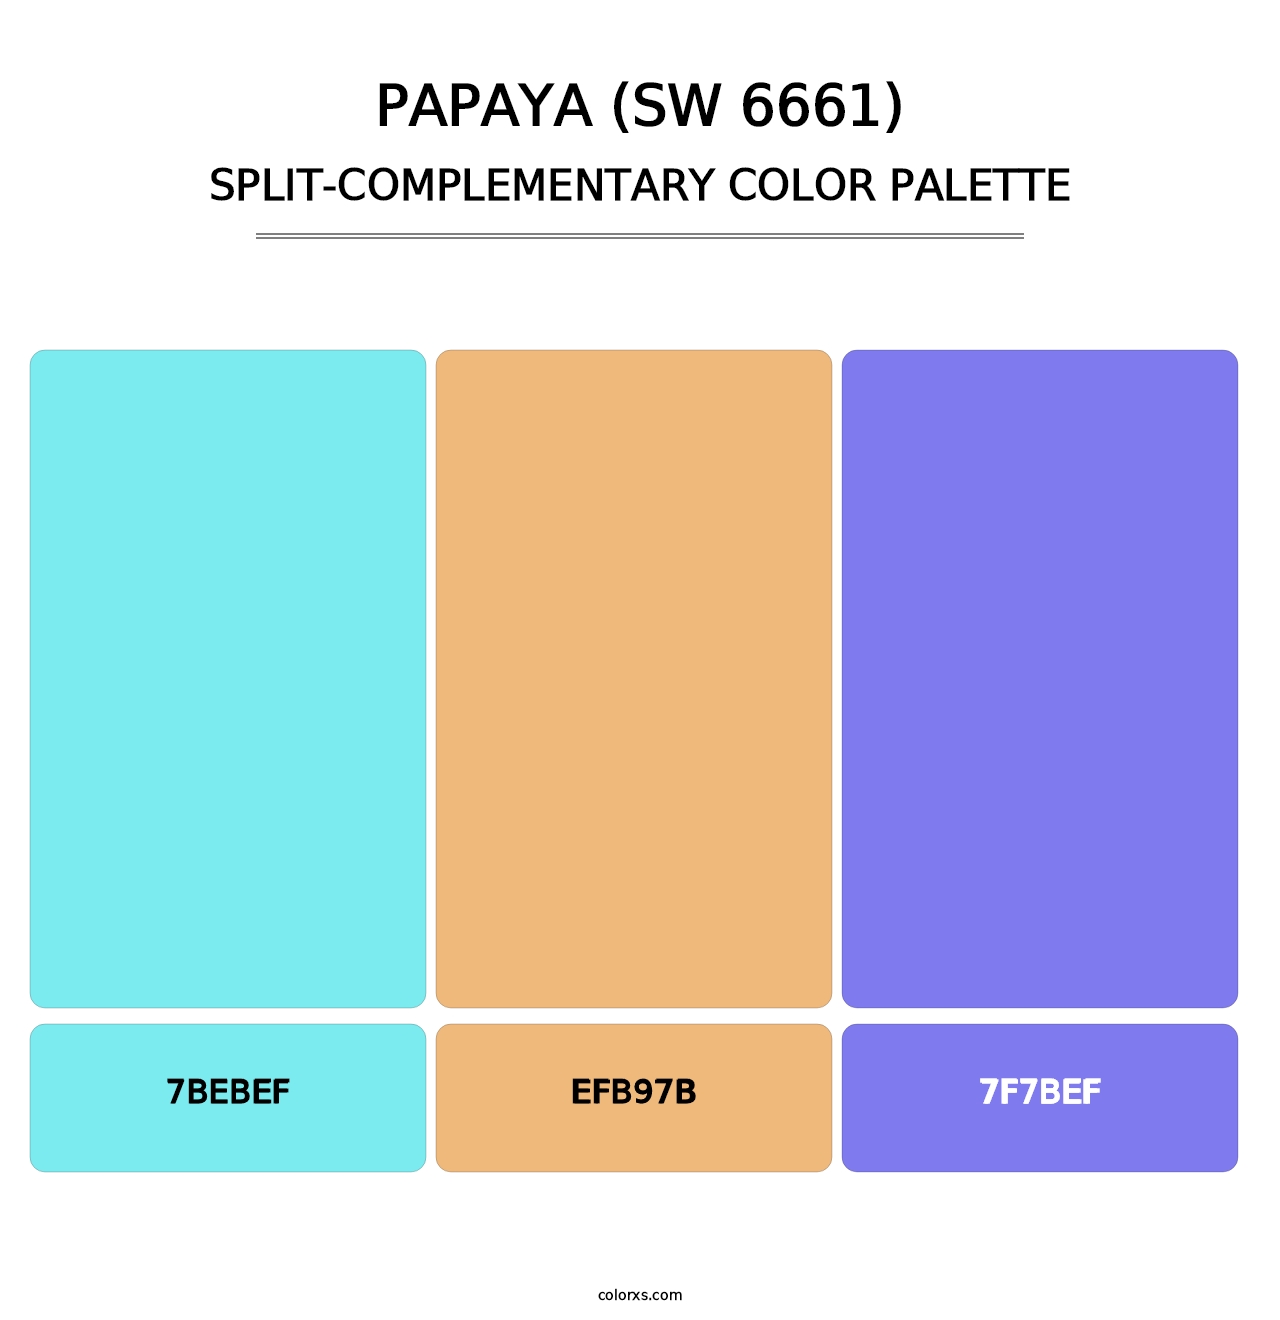 Papaya (SW 6661) - Split-Complementary Color Palette